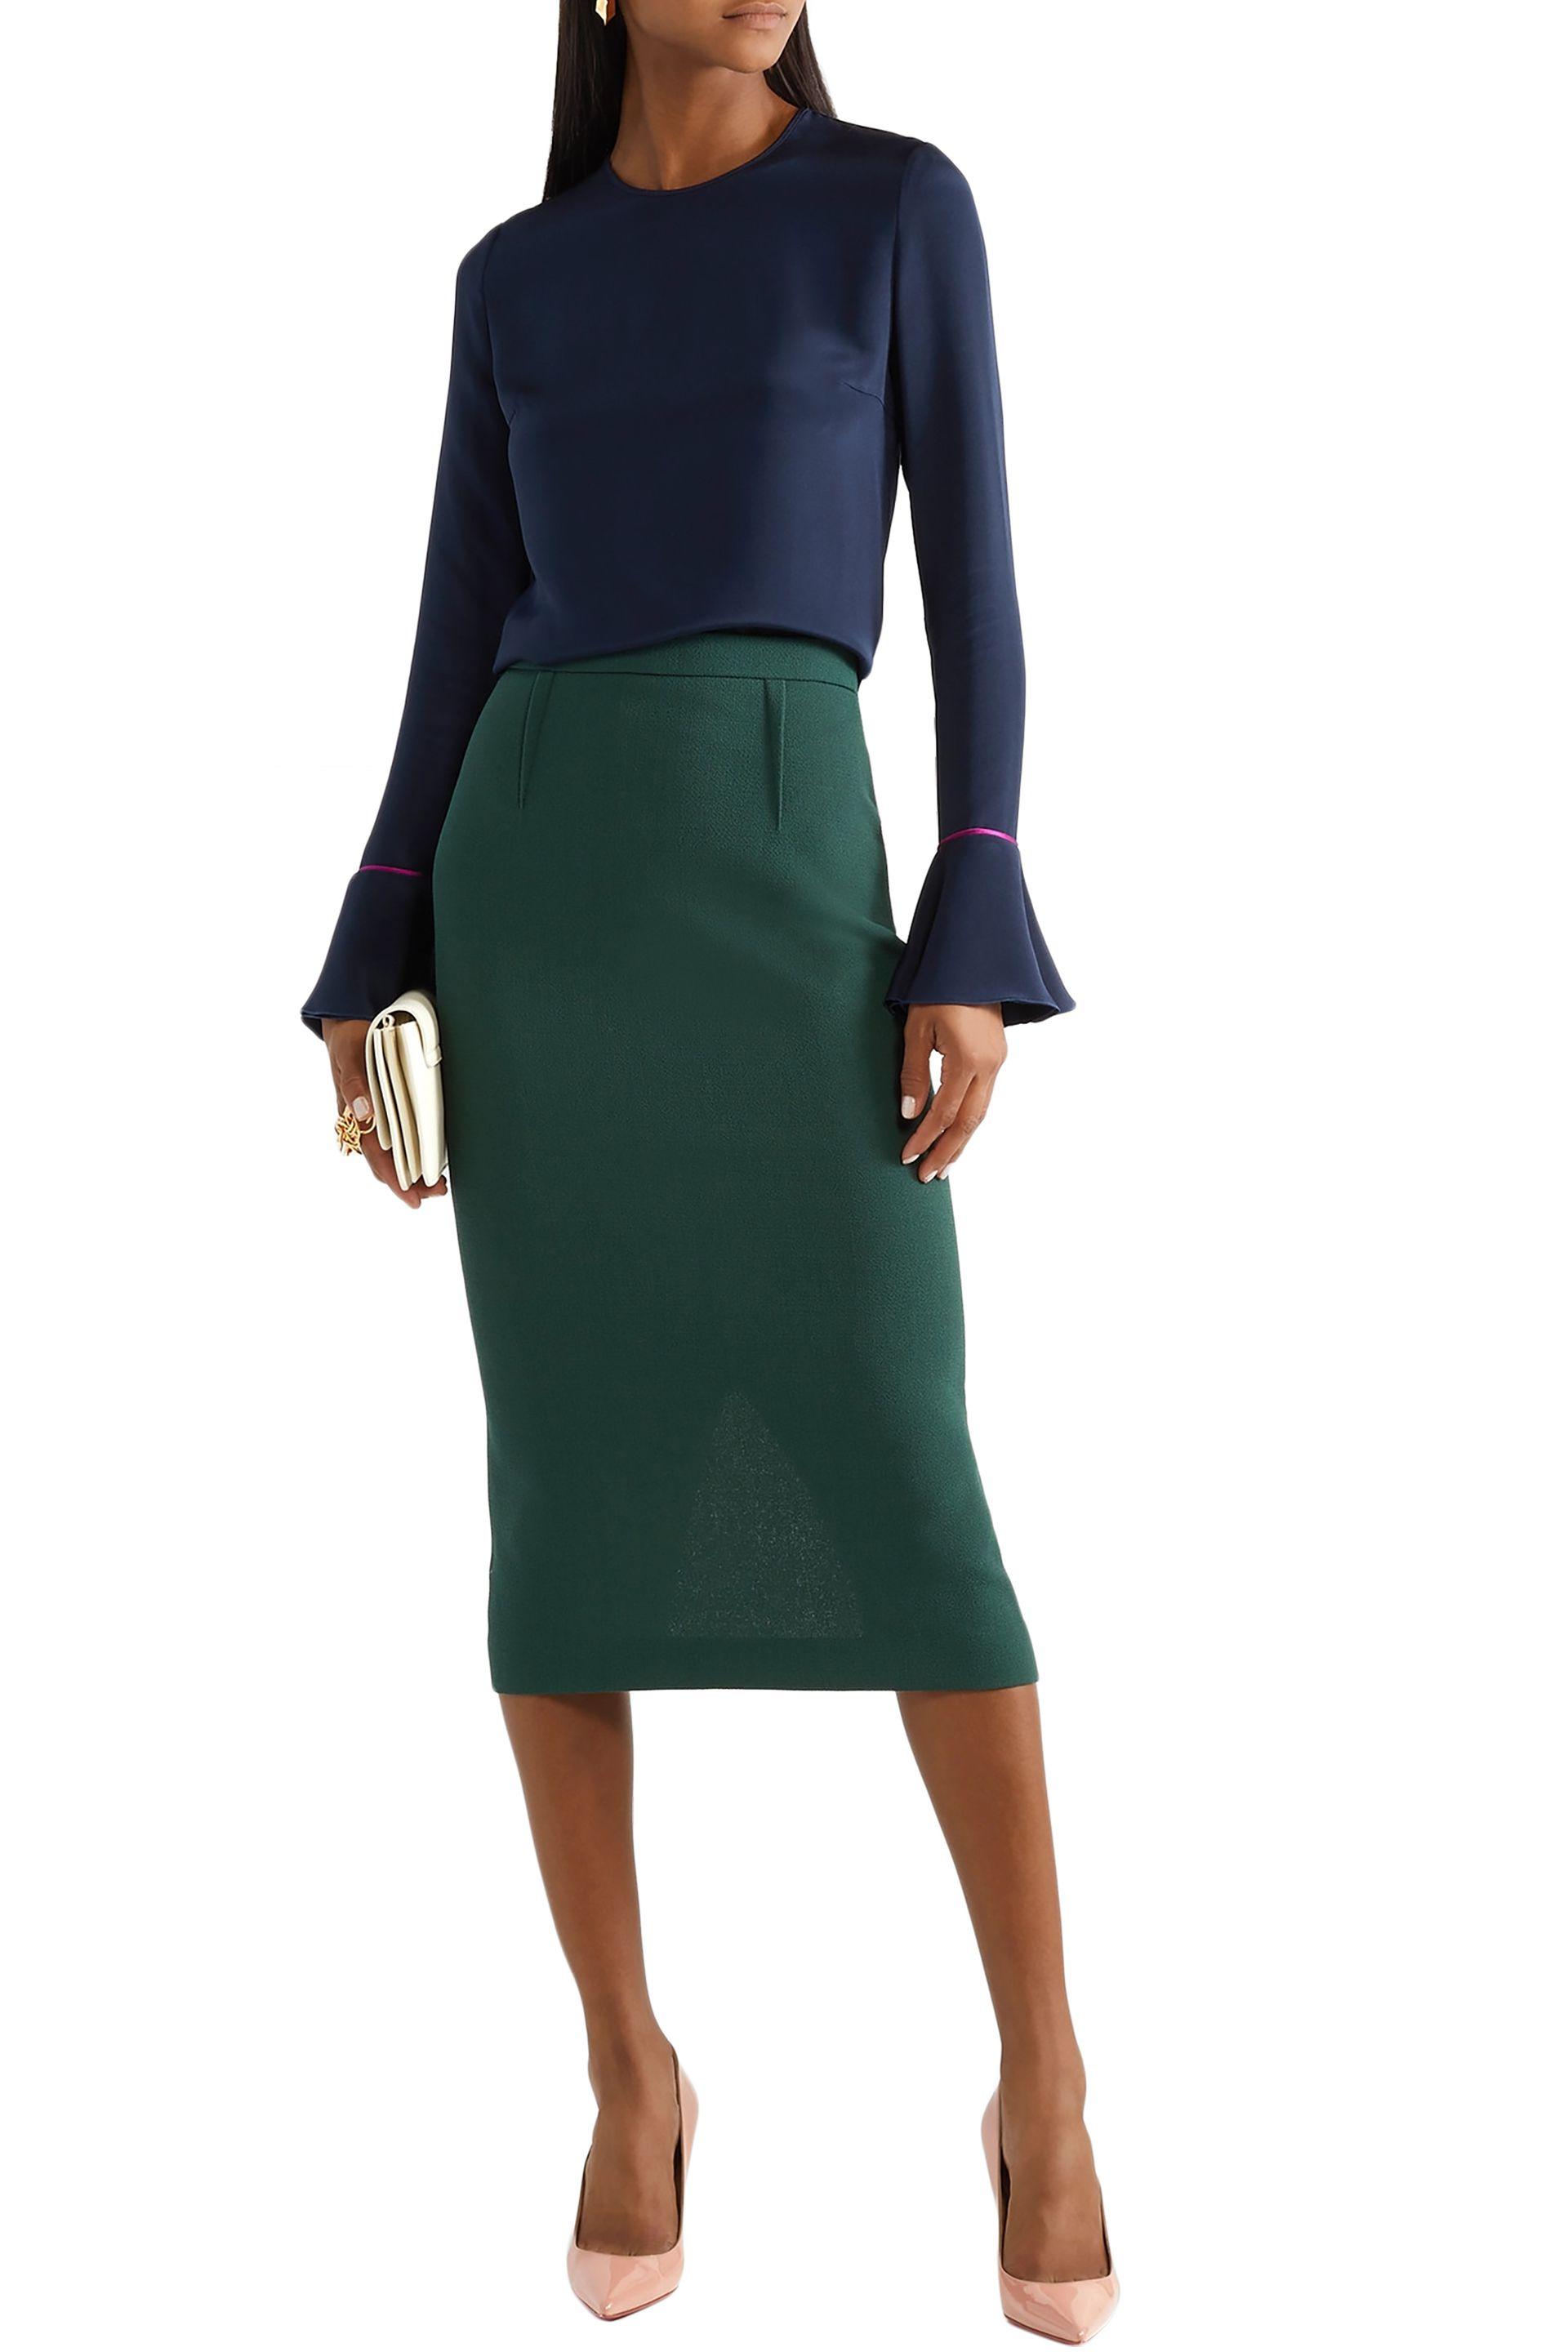 Roland Mouret Arreton Wool-crepe Pencil Skirt in Emerald (Green) - Lyst